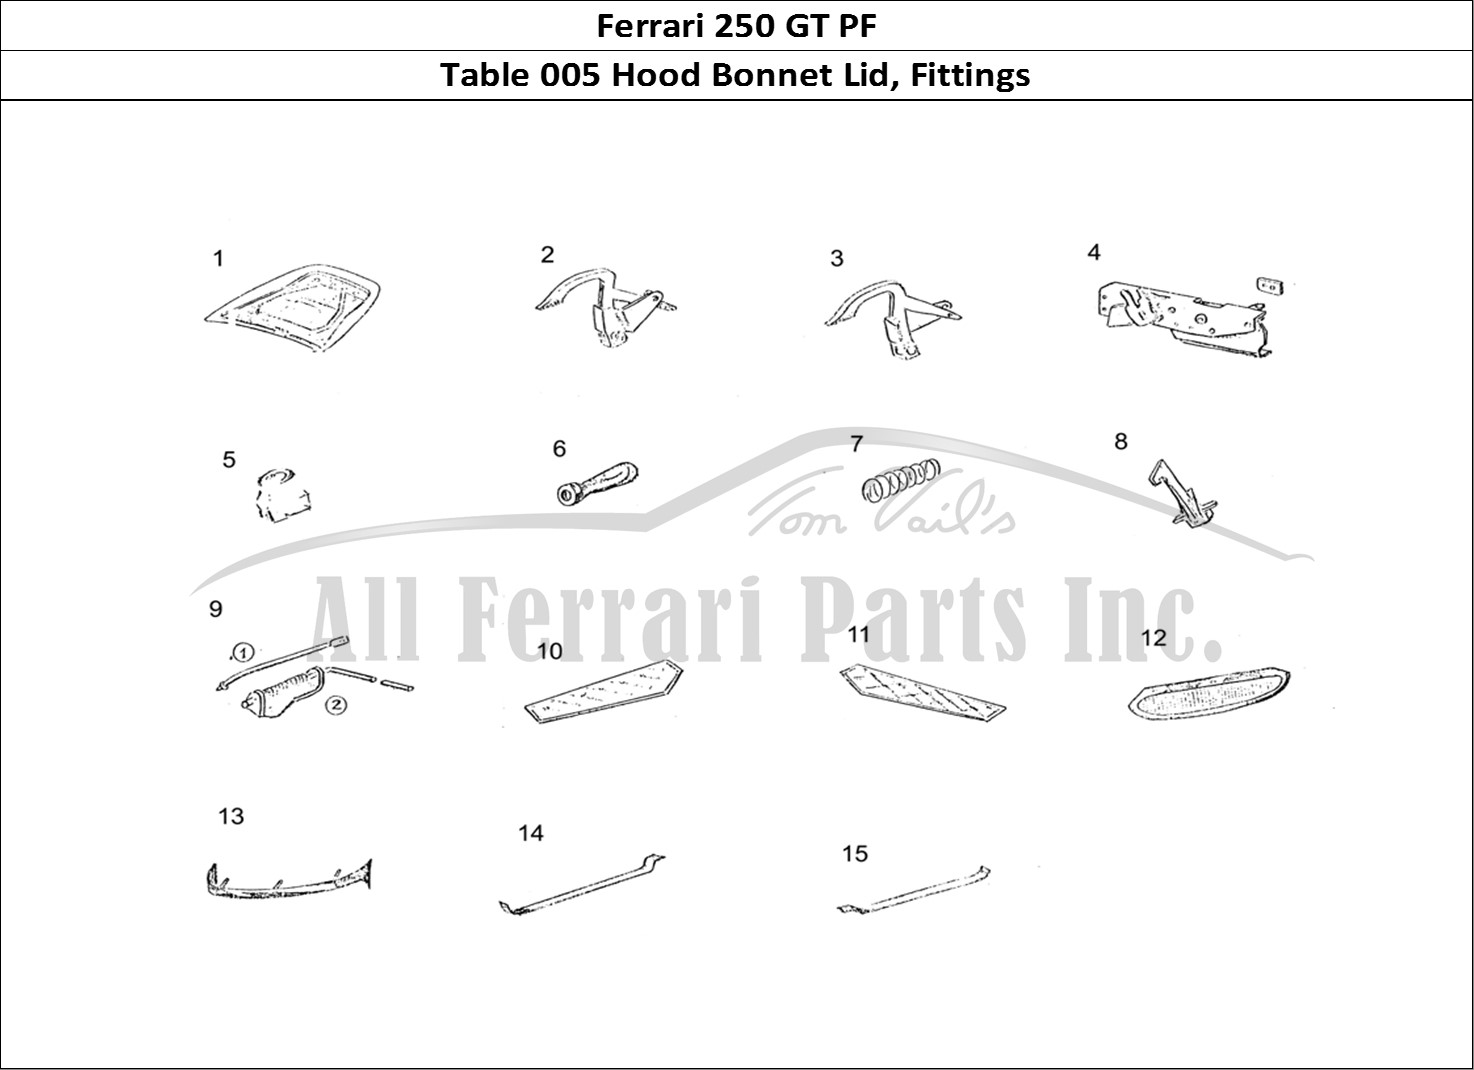 Ferrari Parts Ferrari 250 GT (Coachwork) Page 005 Bonnet and Fittings